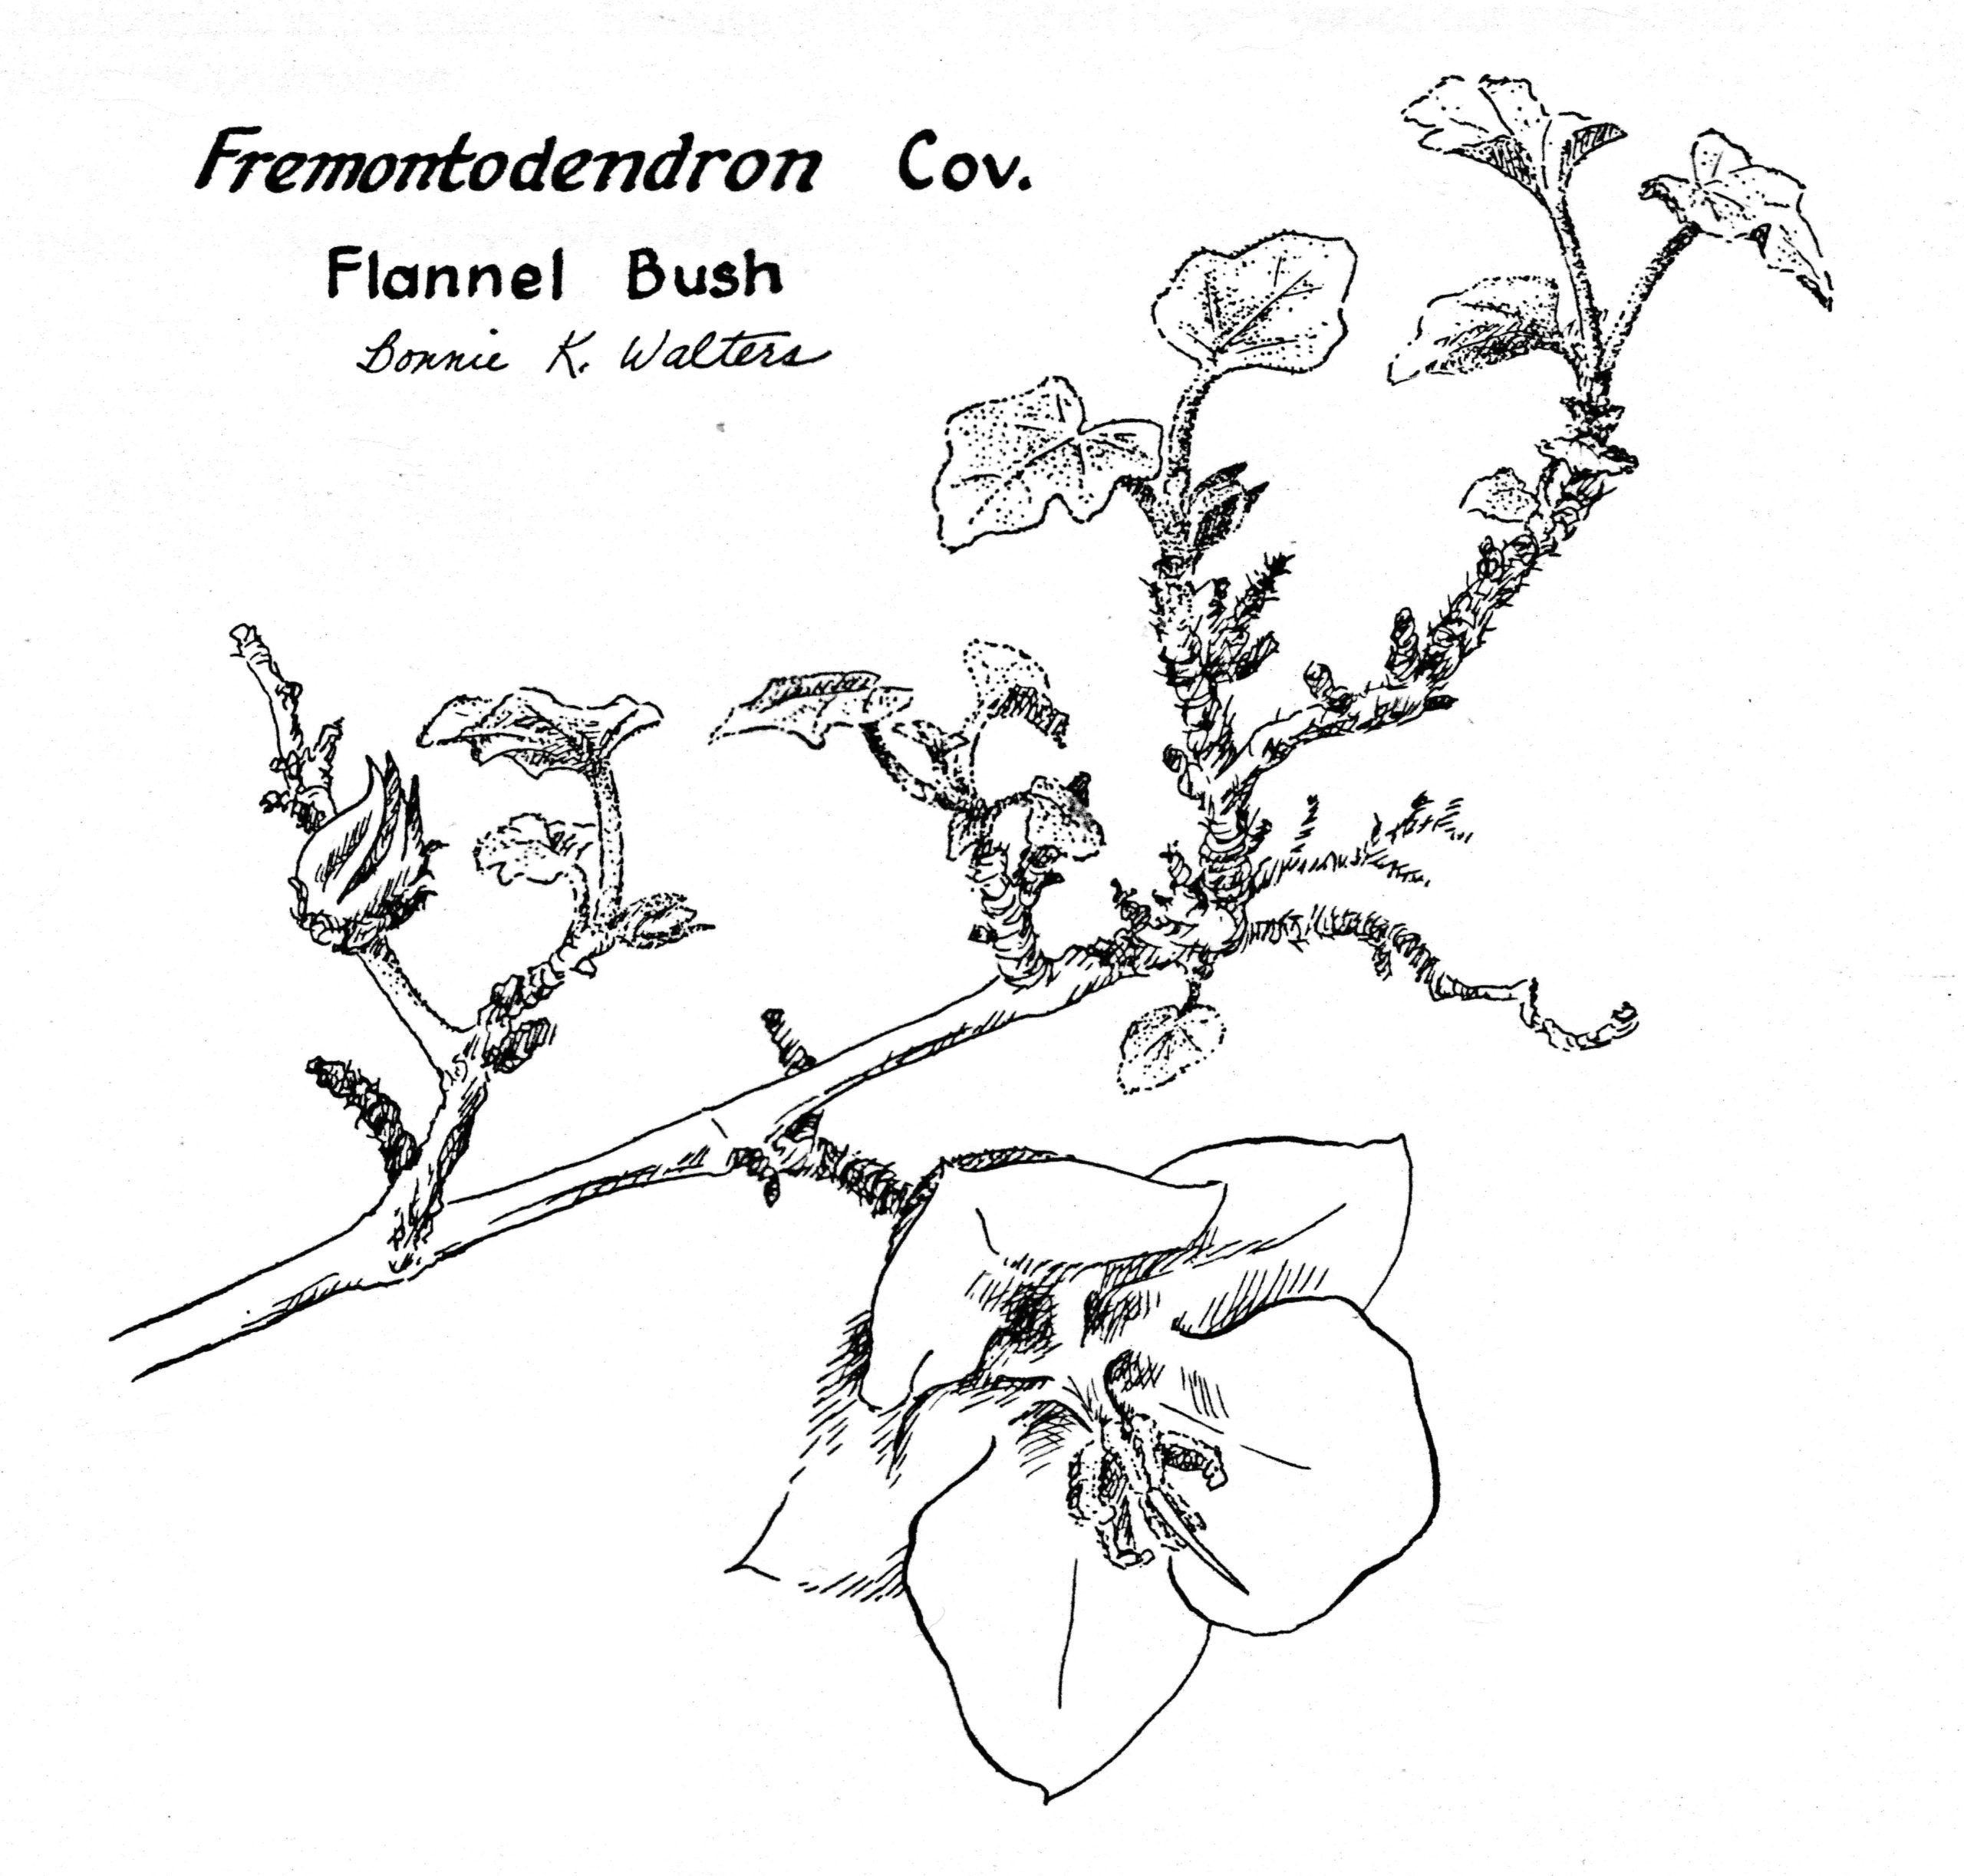 Flannel Bush (Fremontodendron californicum)